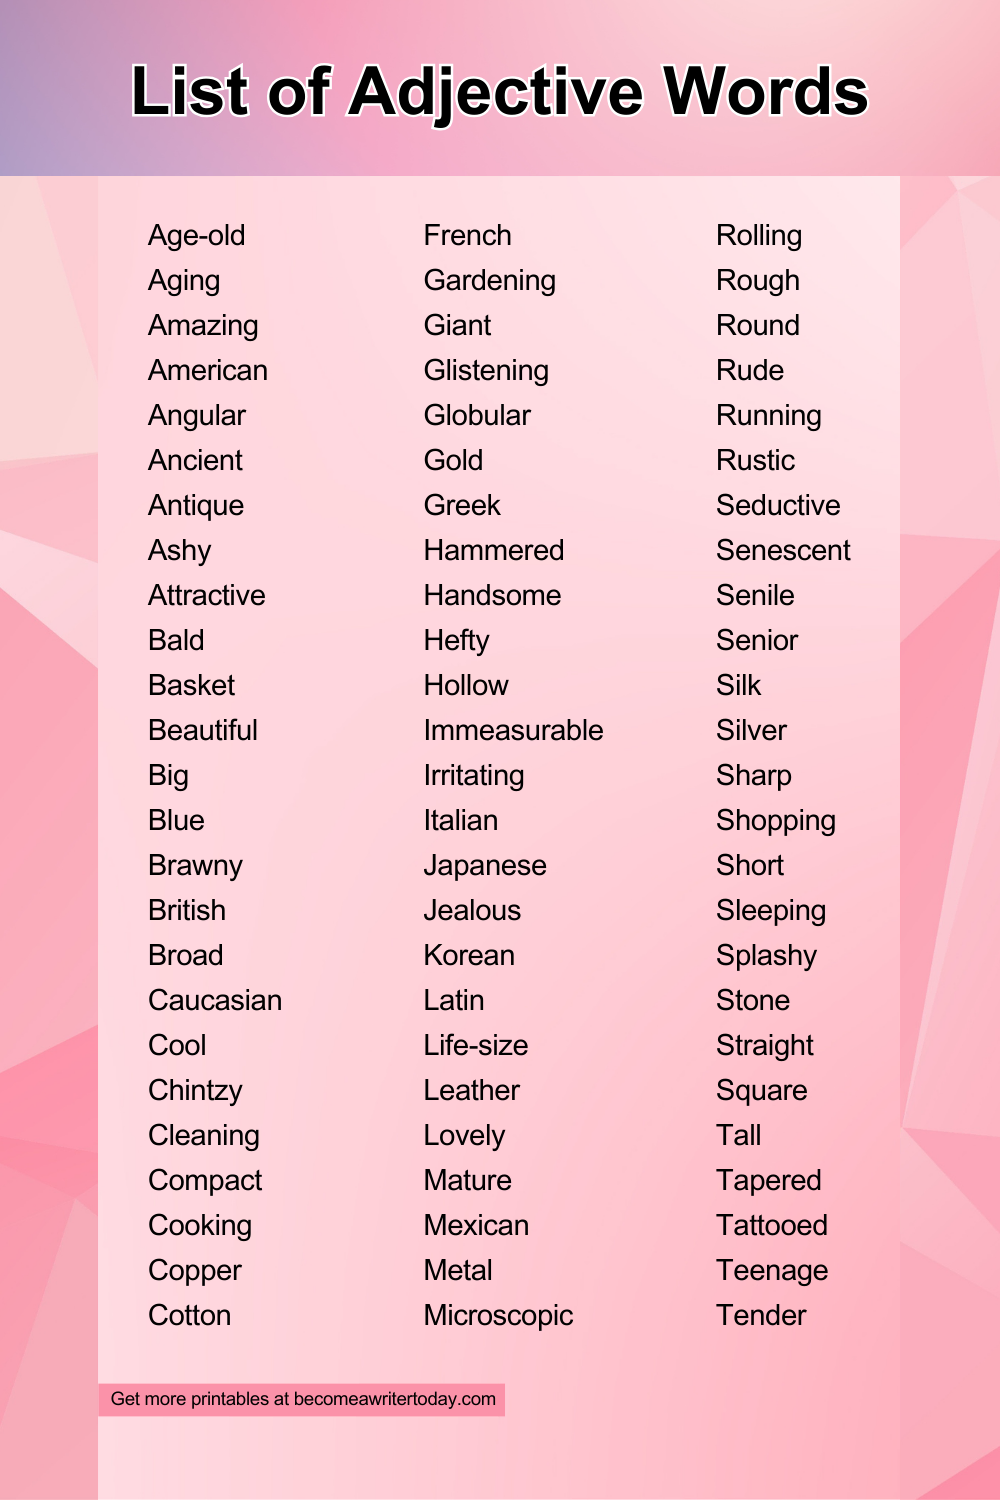 List of adjective words